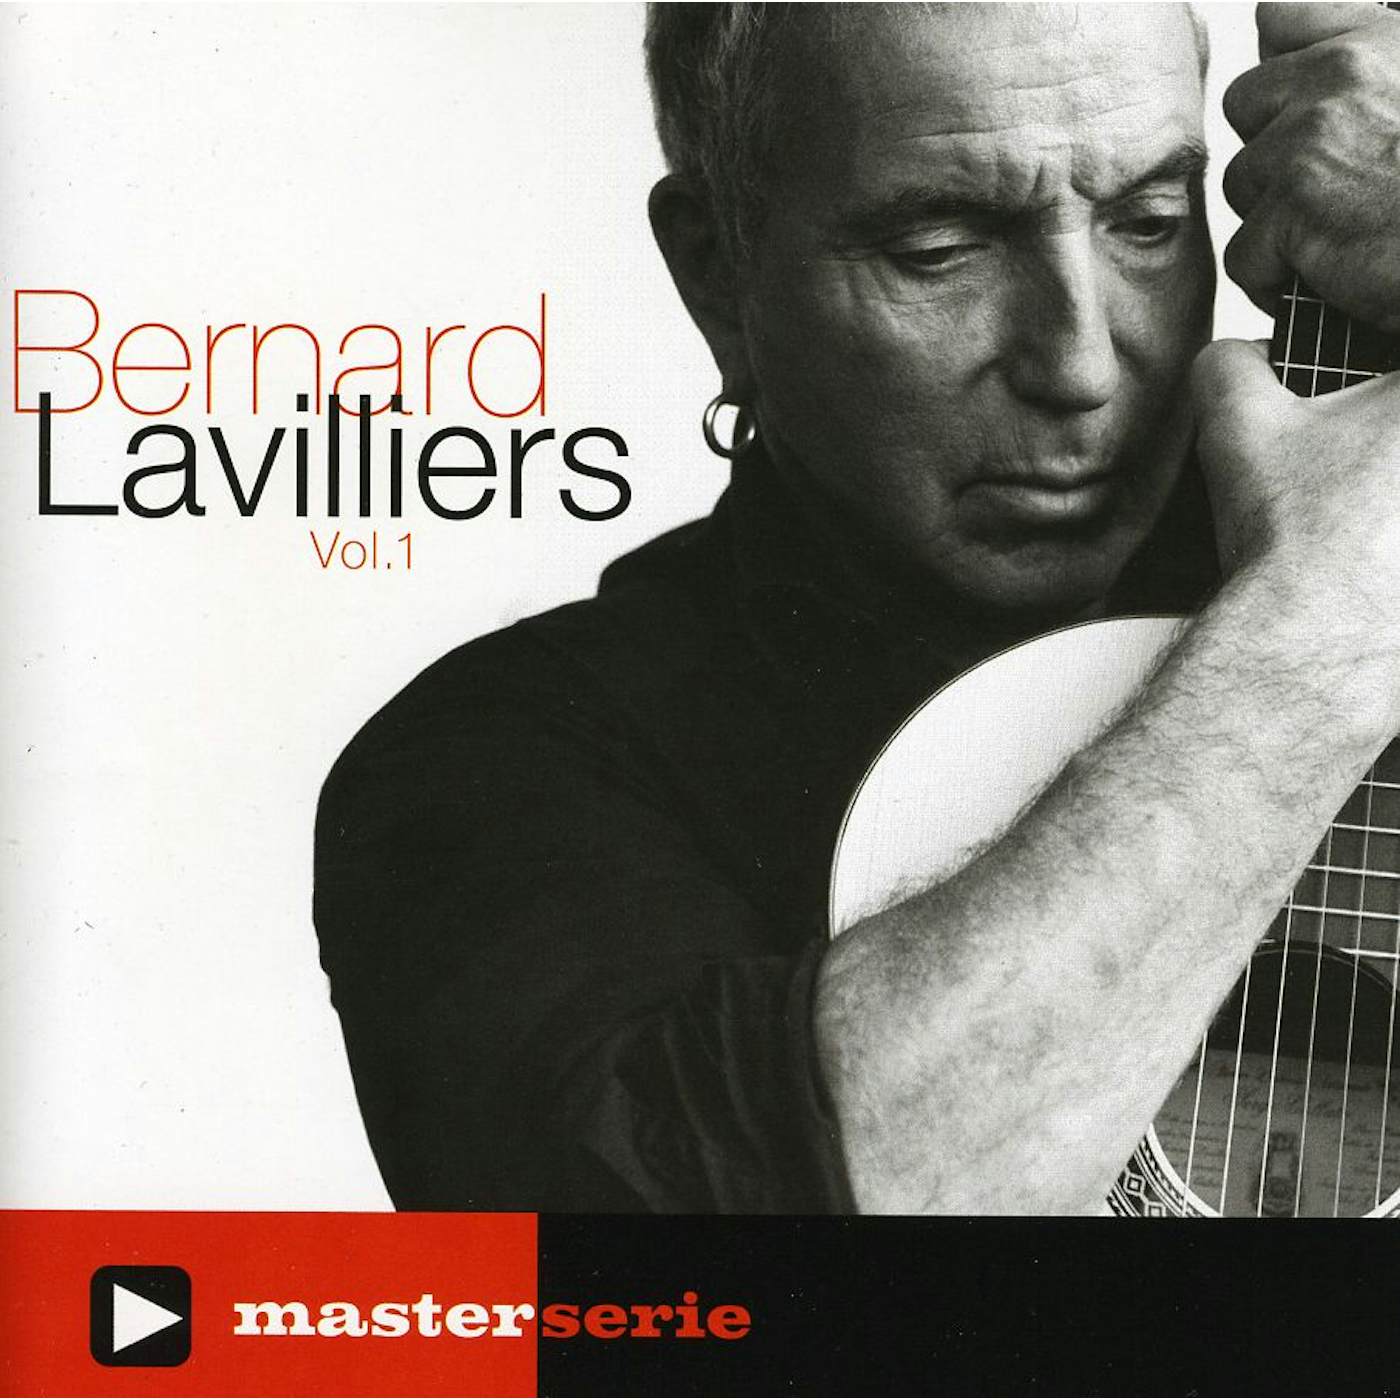 Bernard Lavilliers MASTER SERIE 1 CD